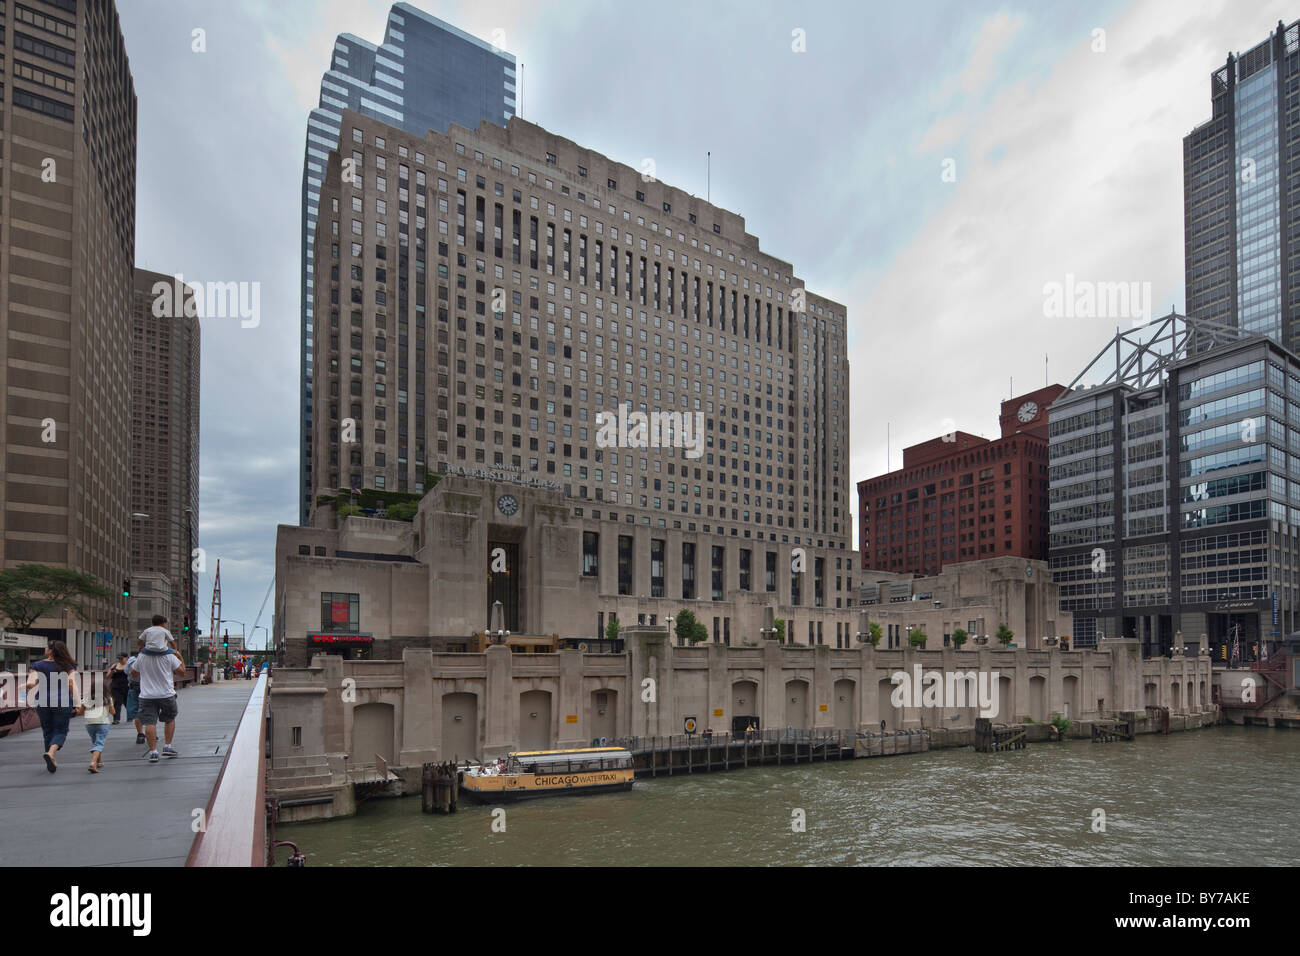 Riverside Plaza, Chicago Daily News building, Chicago, Illinois, USA Stock Photo